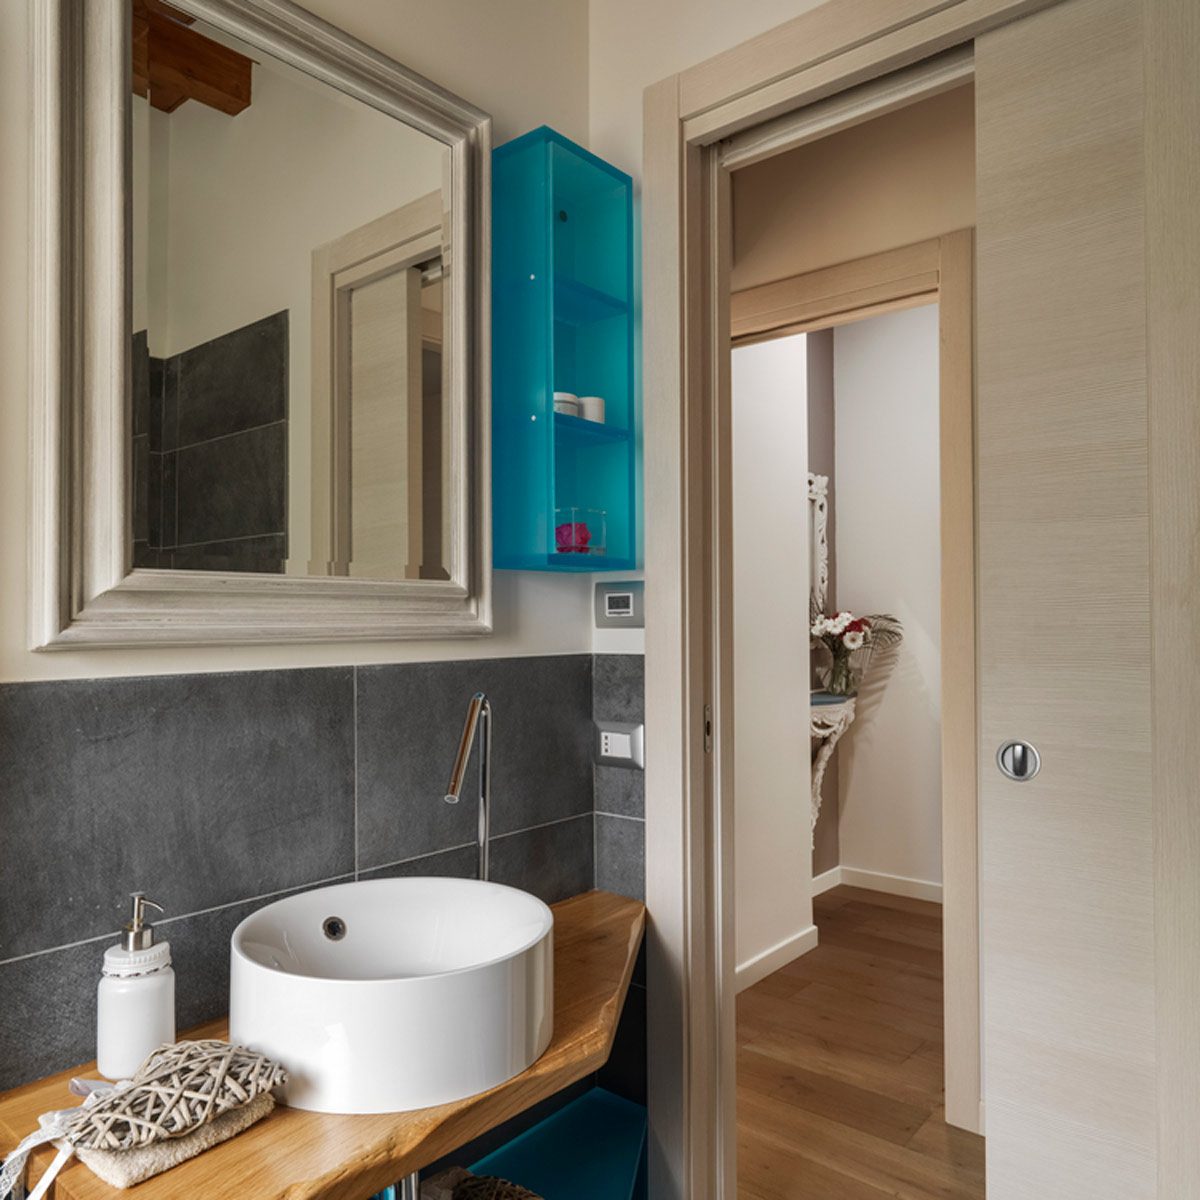 20 DIY Bathroom Storage Ideas for Small Spaces